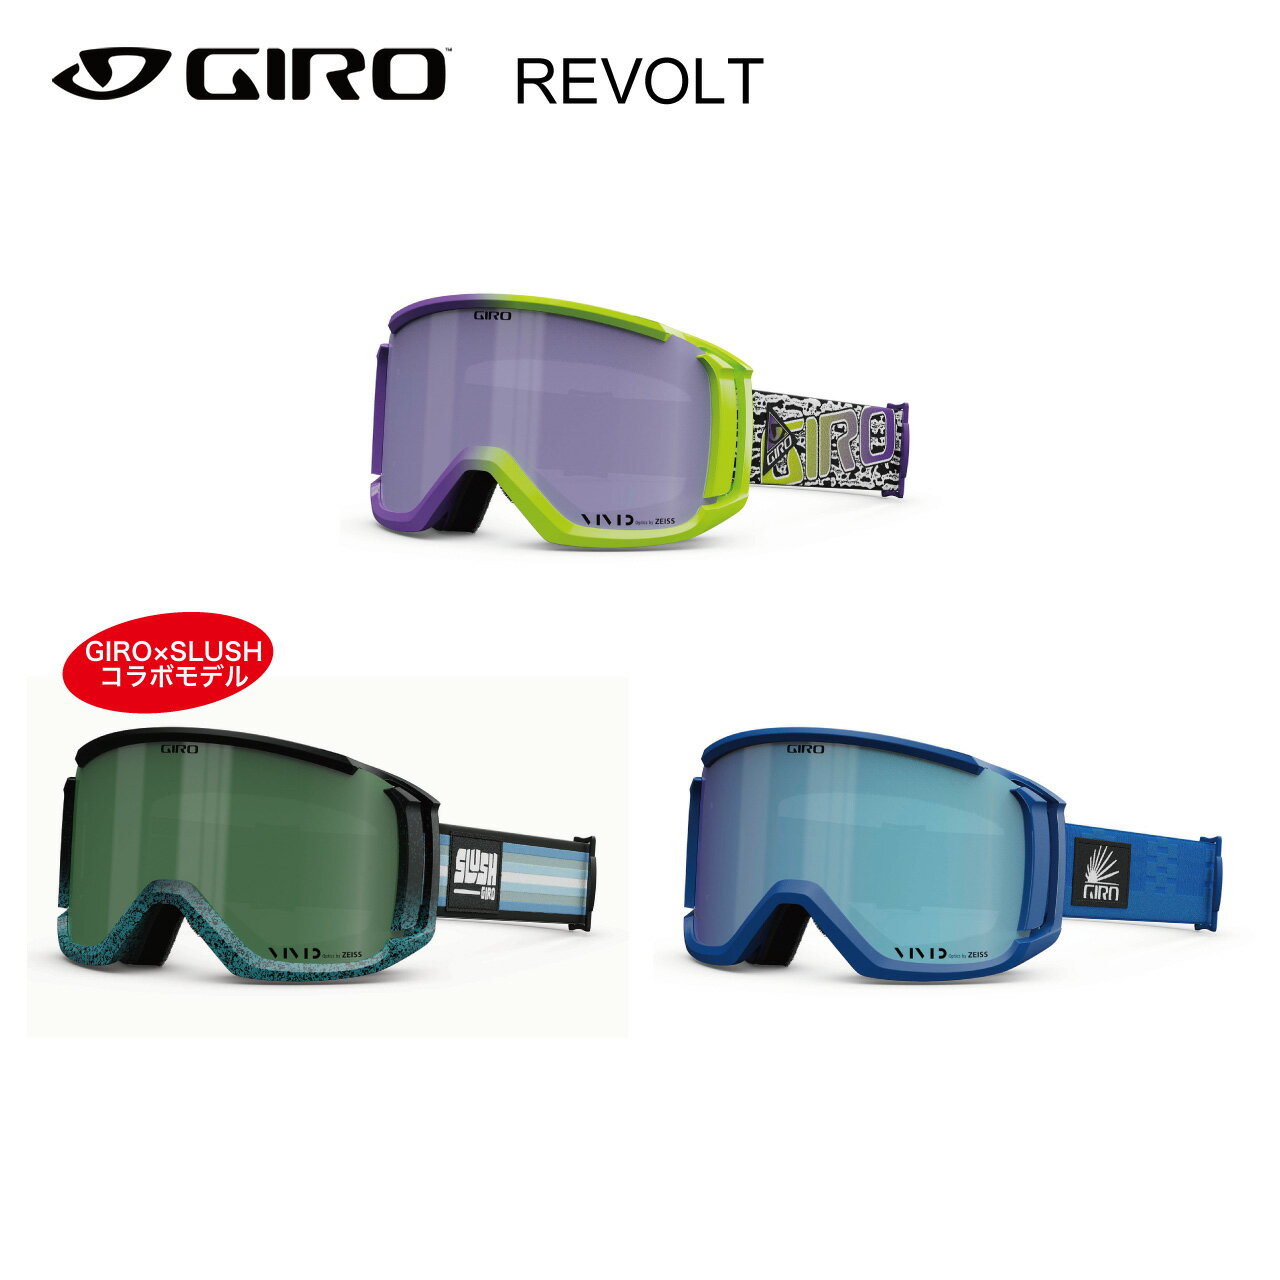 GIRO ジロー REVOLT スキー ゴーグル メンズ 男性 大人 曇り止め加工 紫外線カット 耐久性 広角視野 レンズ交換可能 メガネ着用可 軽量 ベルト幅44mm スノーボード 雪山 国内正規品